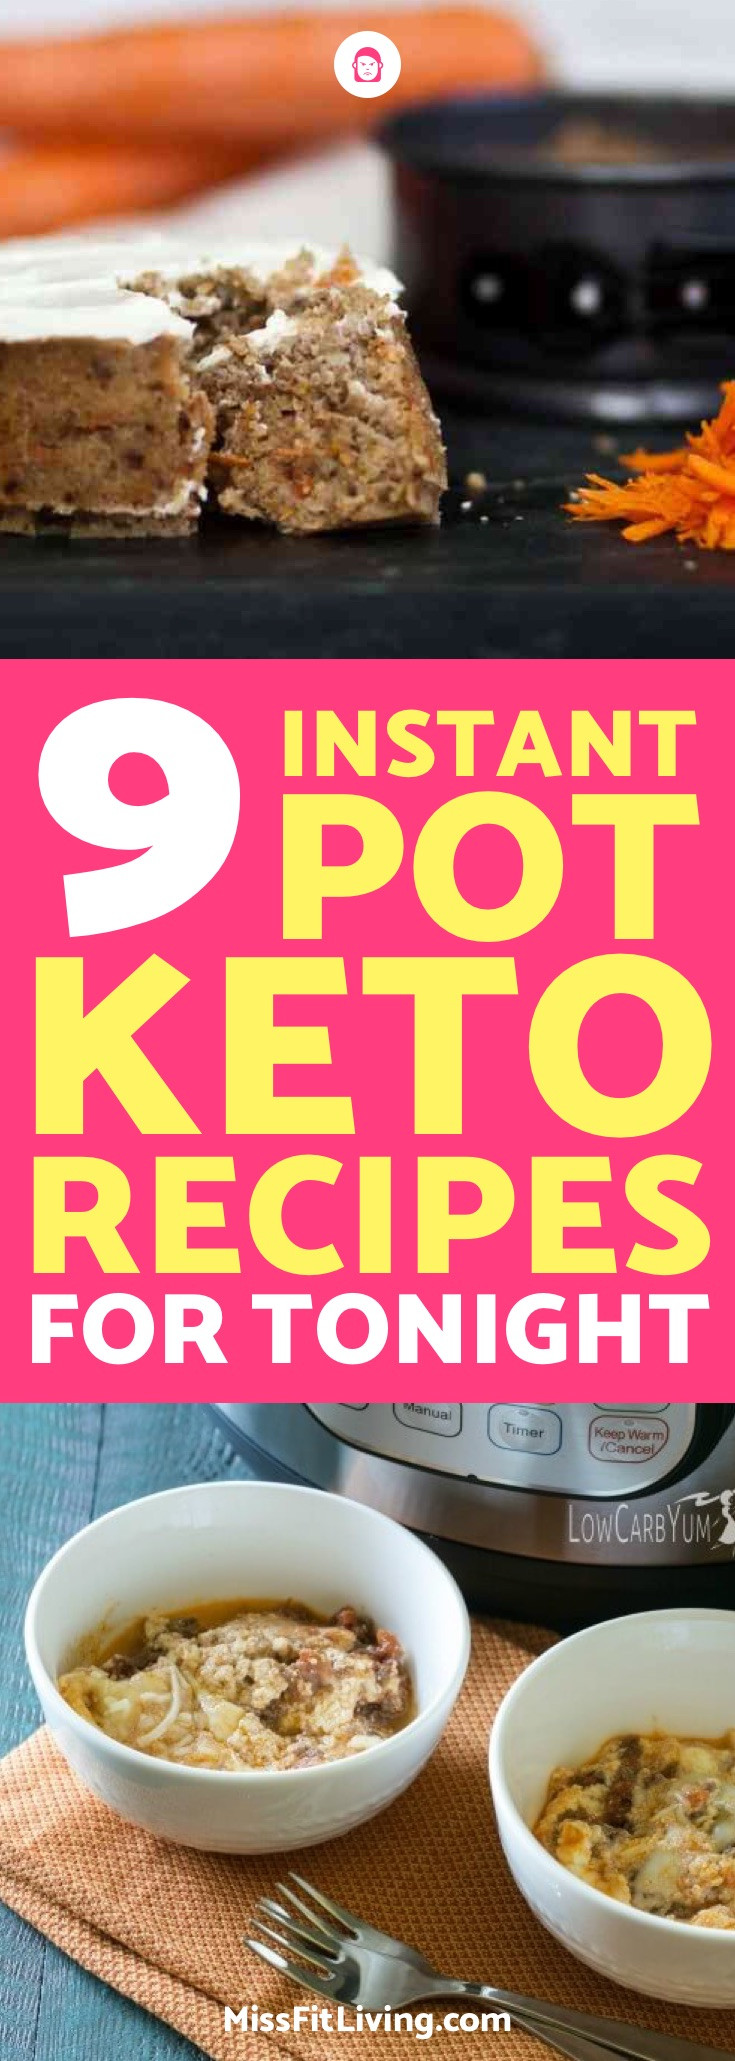 Insta Pot Keto Recipes
 9 Instant Pot Keto Recipes To Try Tonight While Doing the